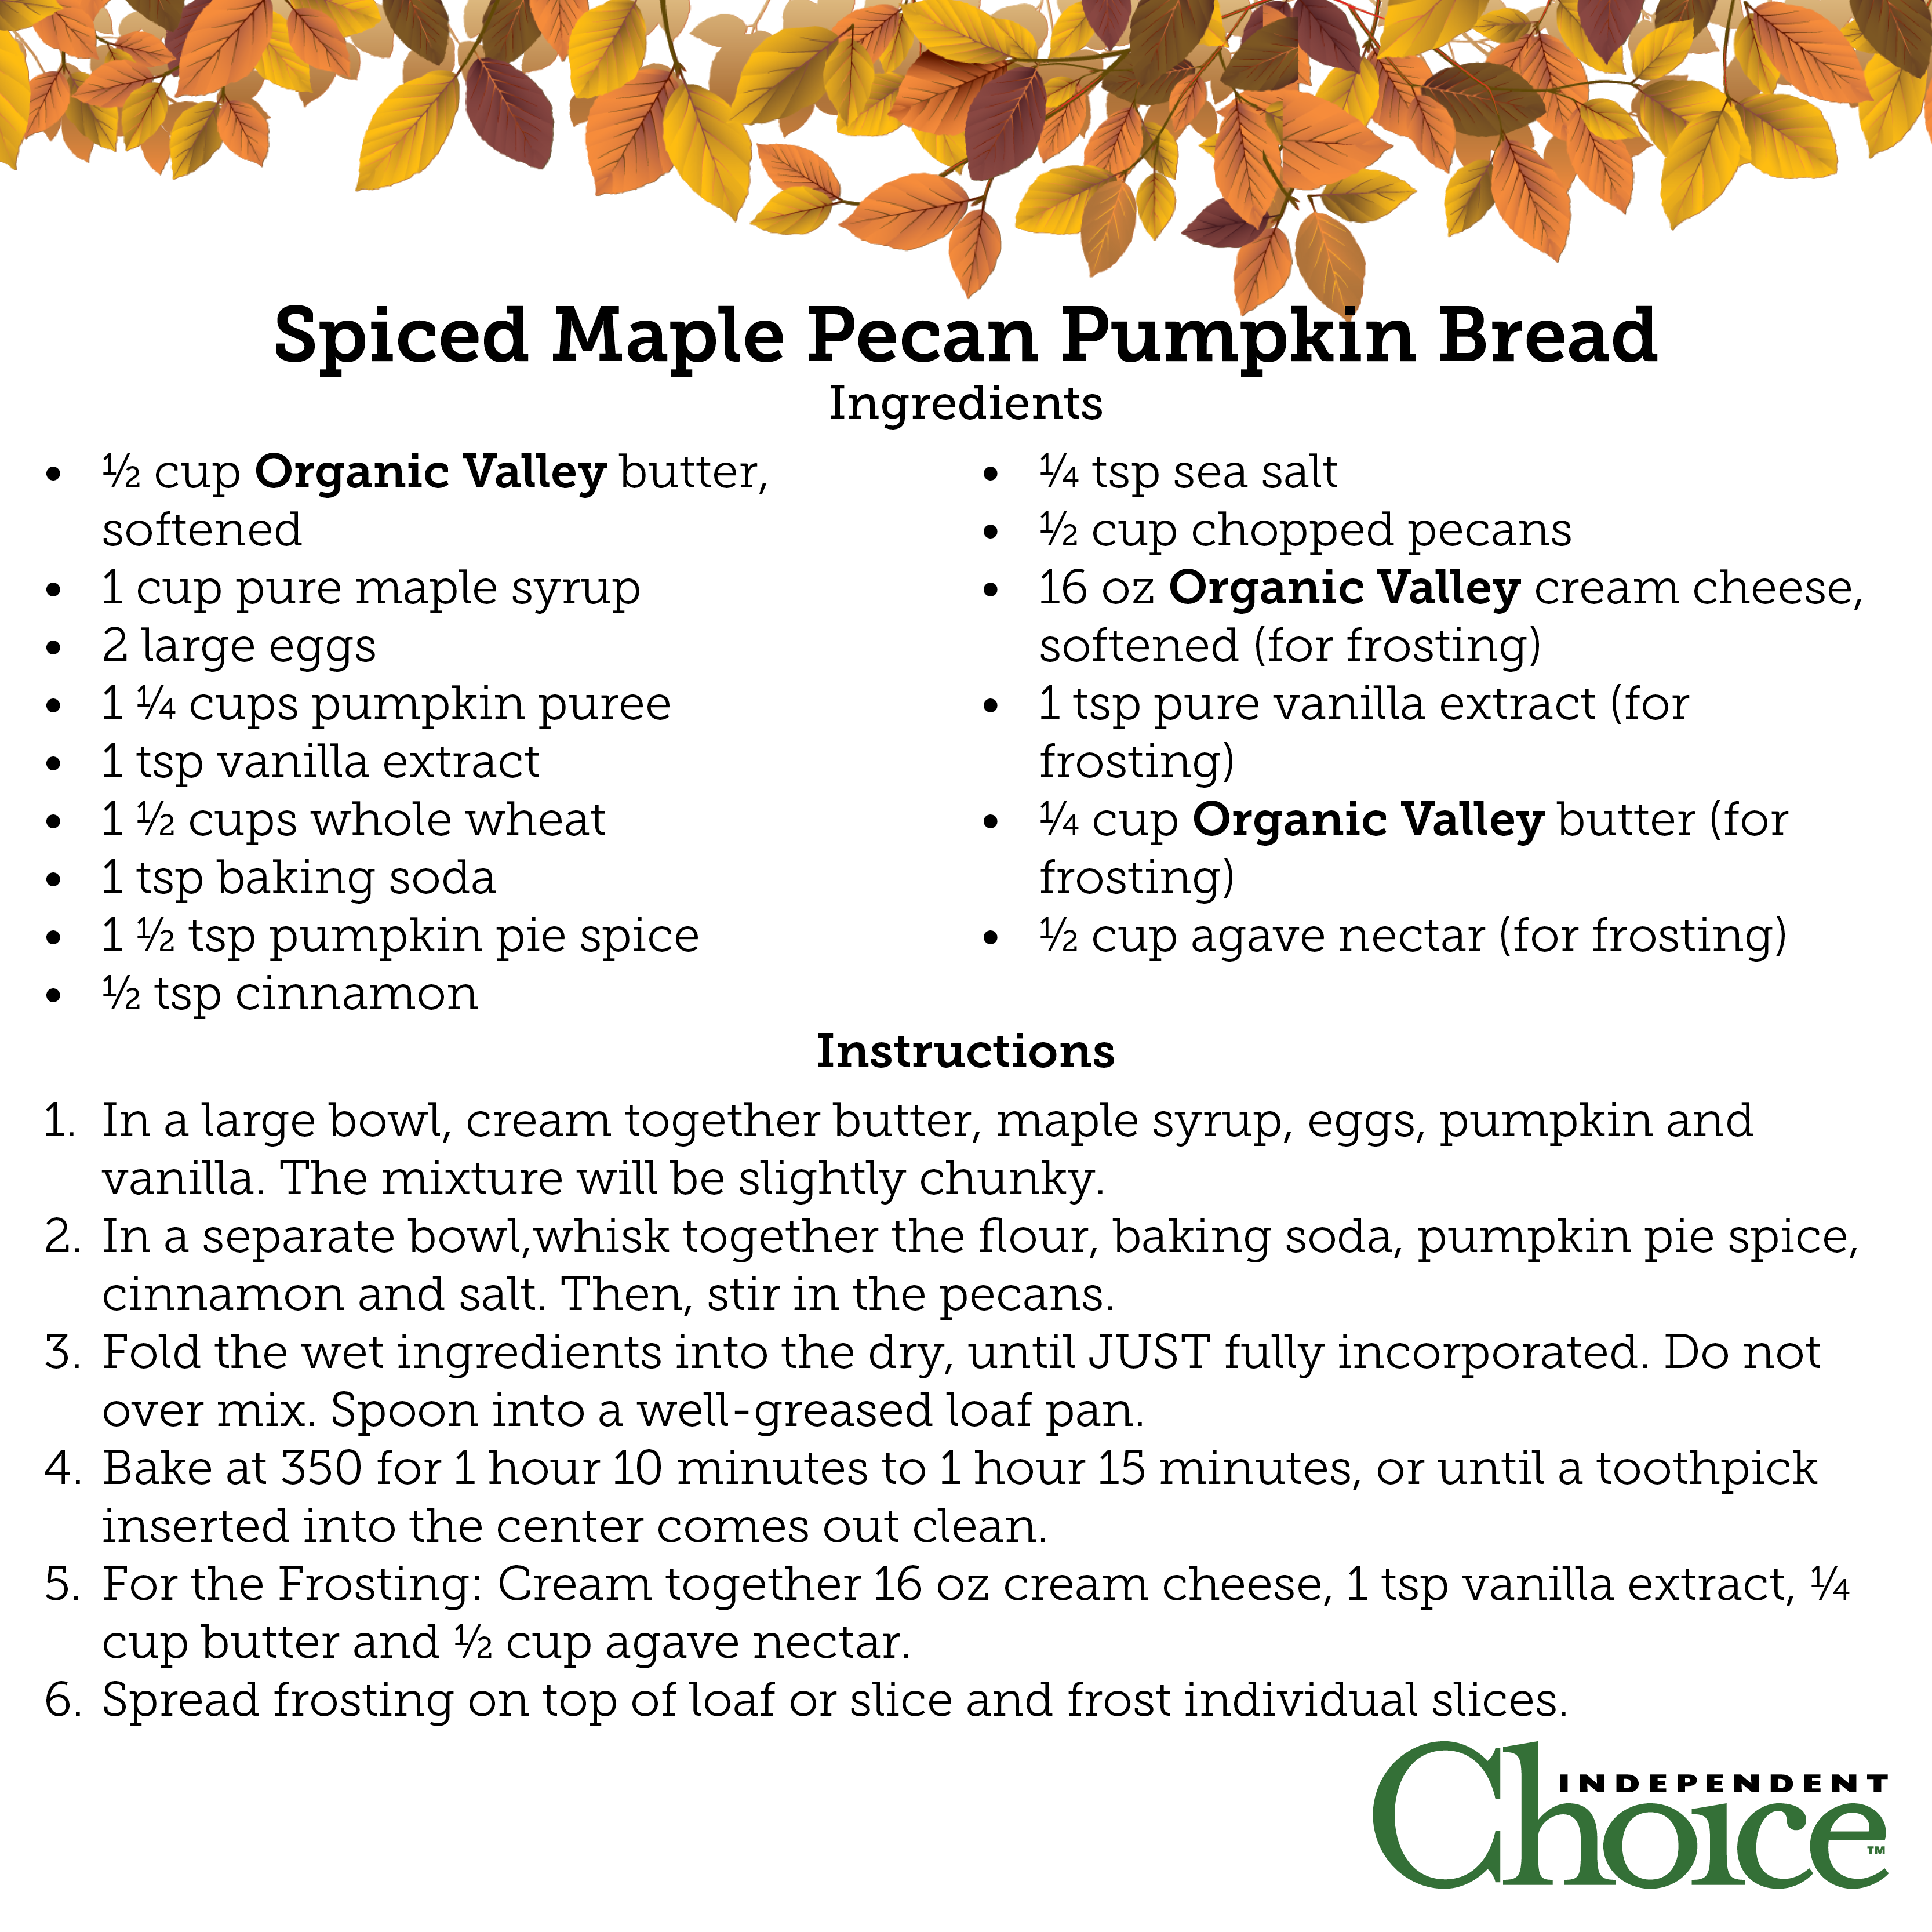 Spiced Maple Pecan Pumpkin Bread